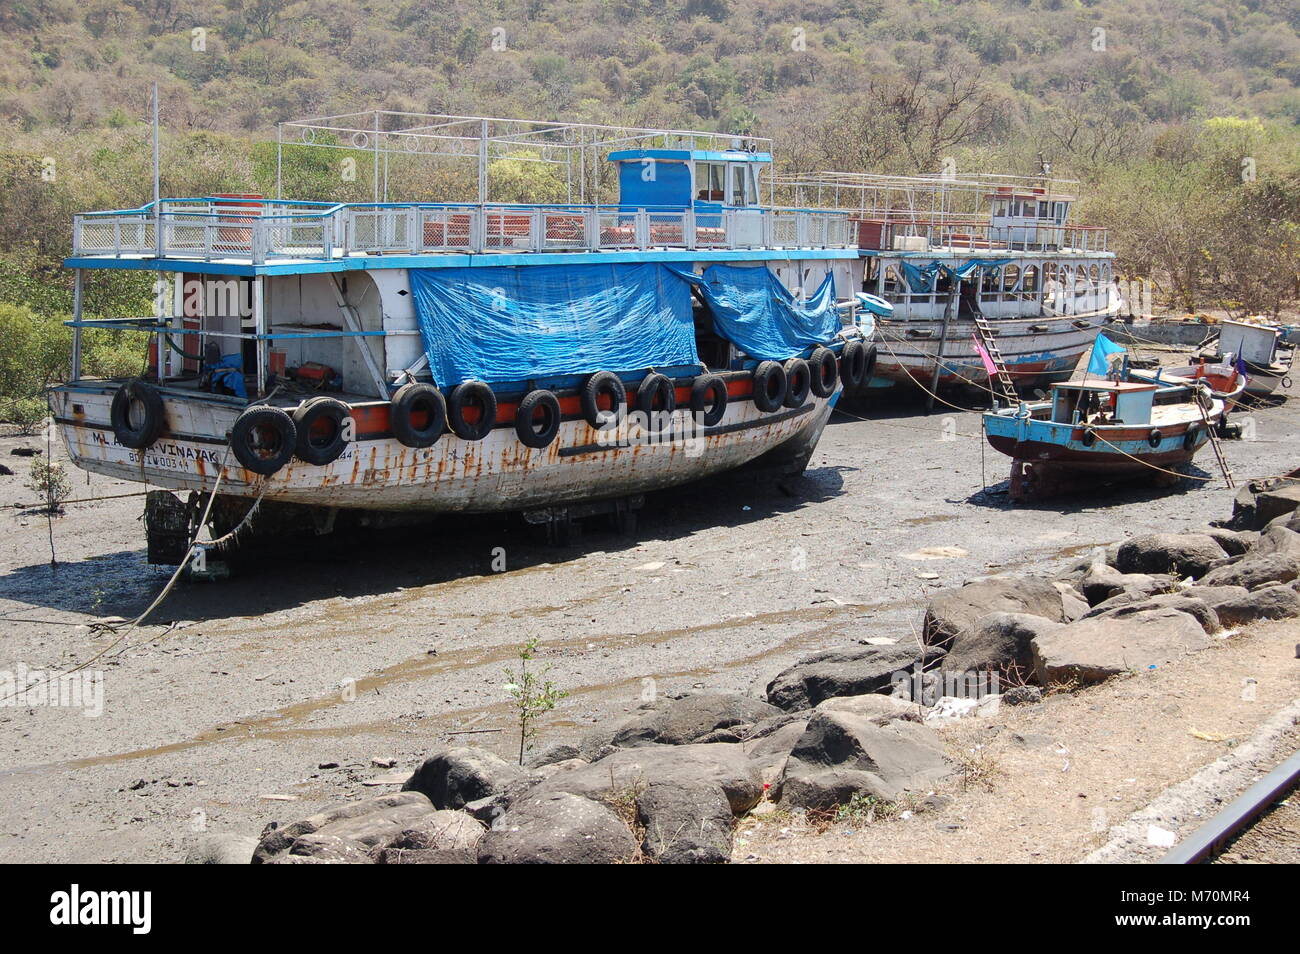 Strände Boote auf Elephanta Island, Mumbai, Indien Stockfoto